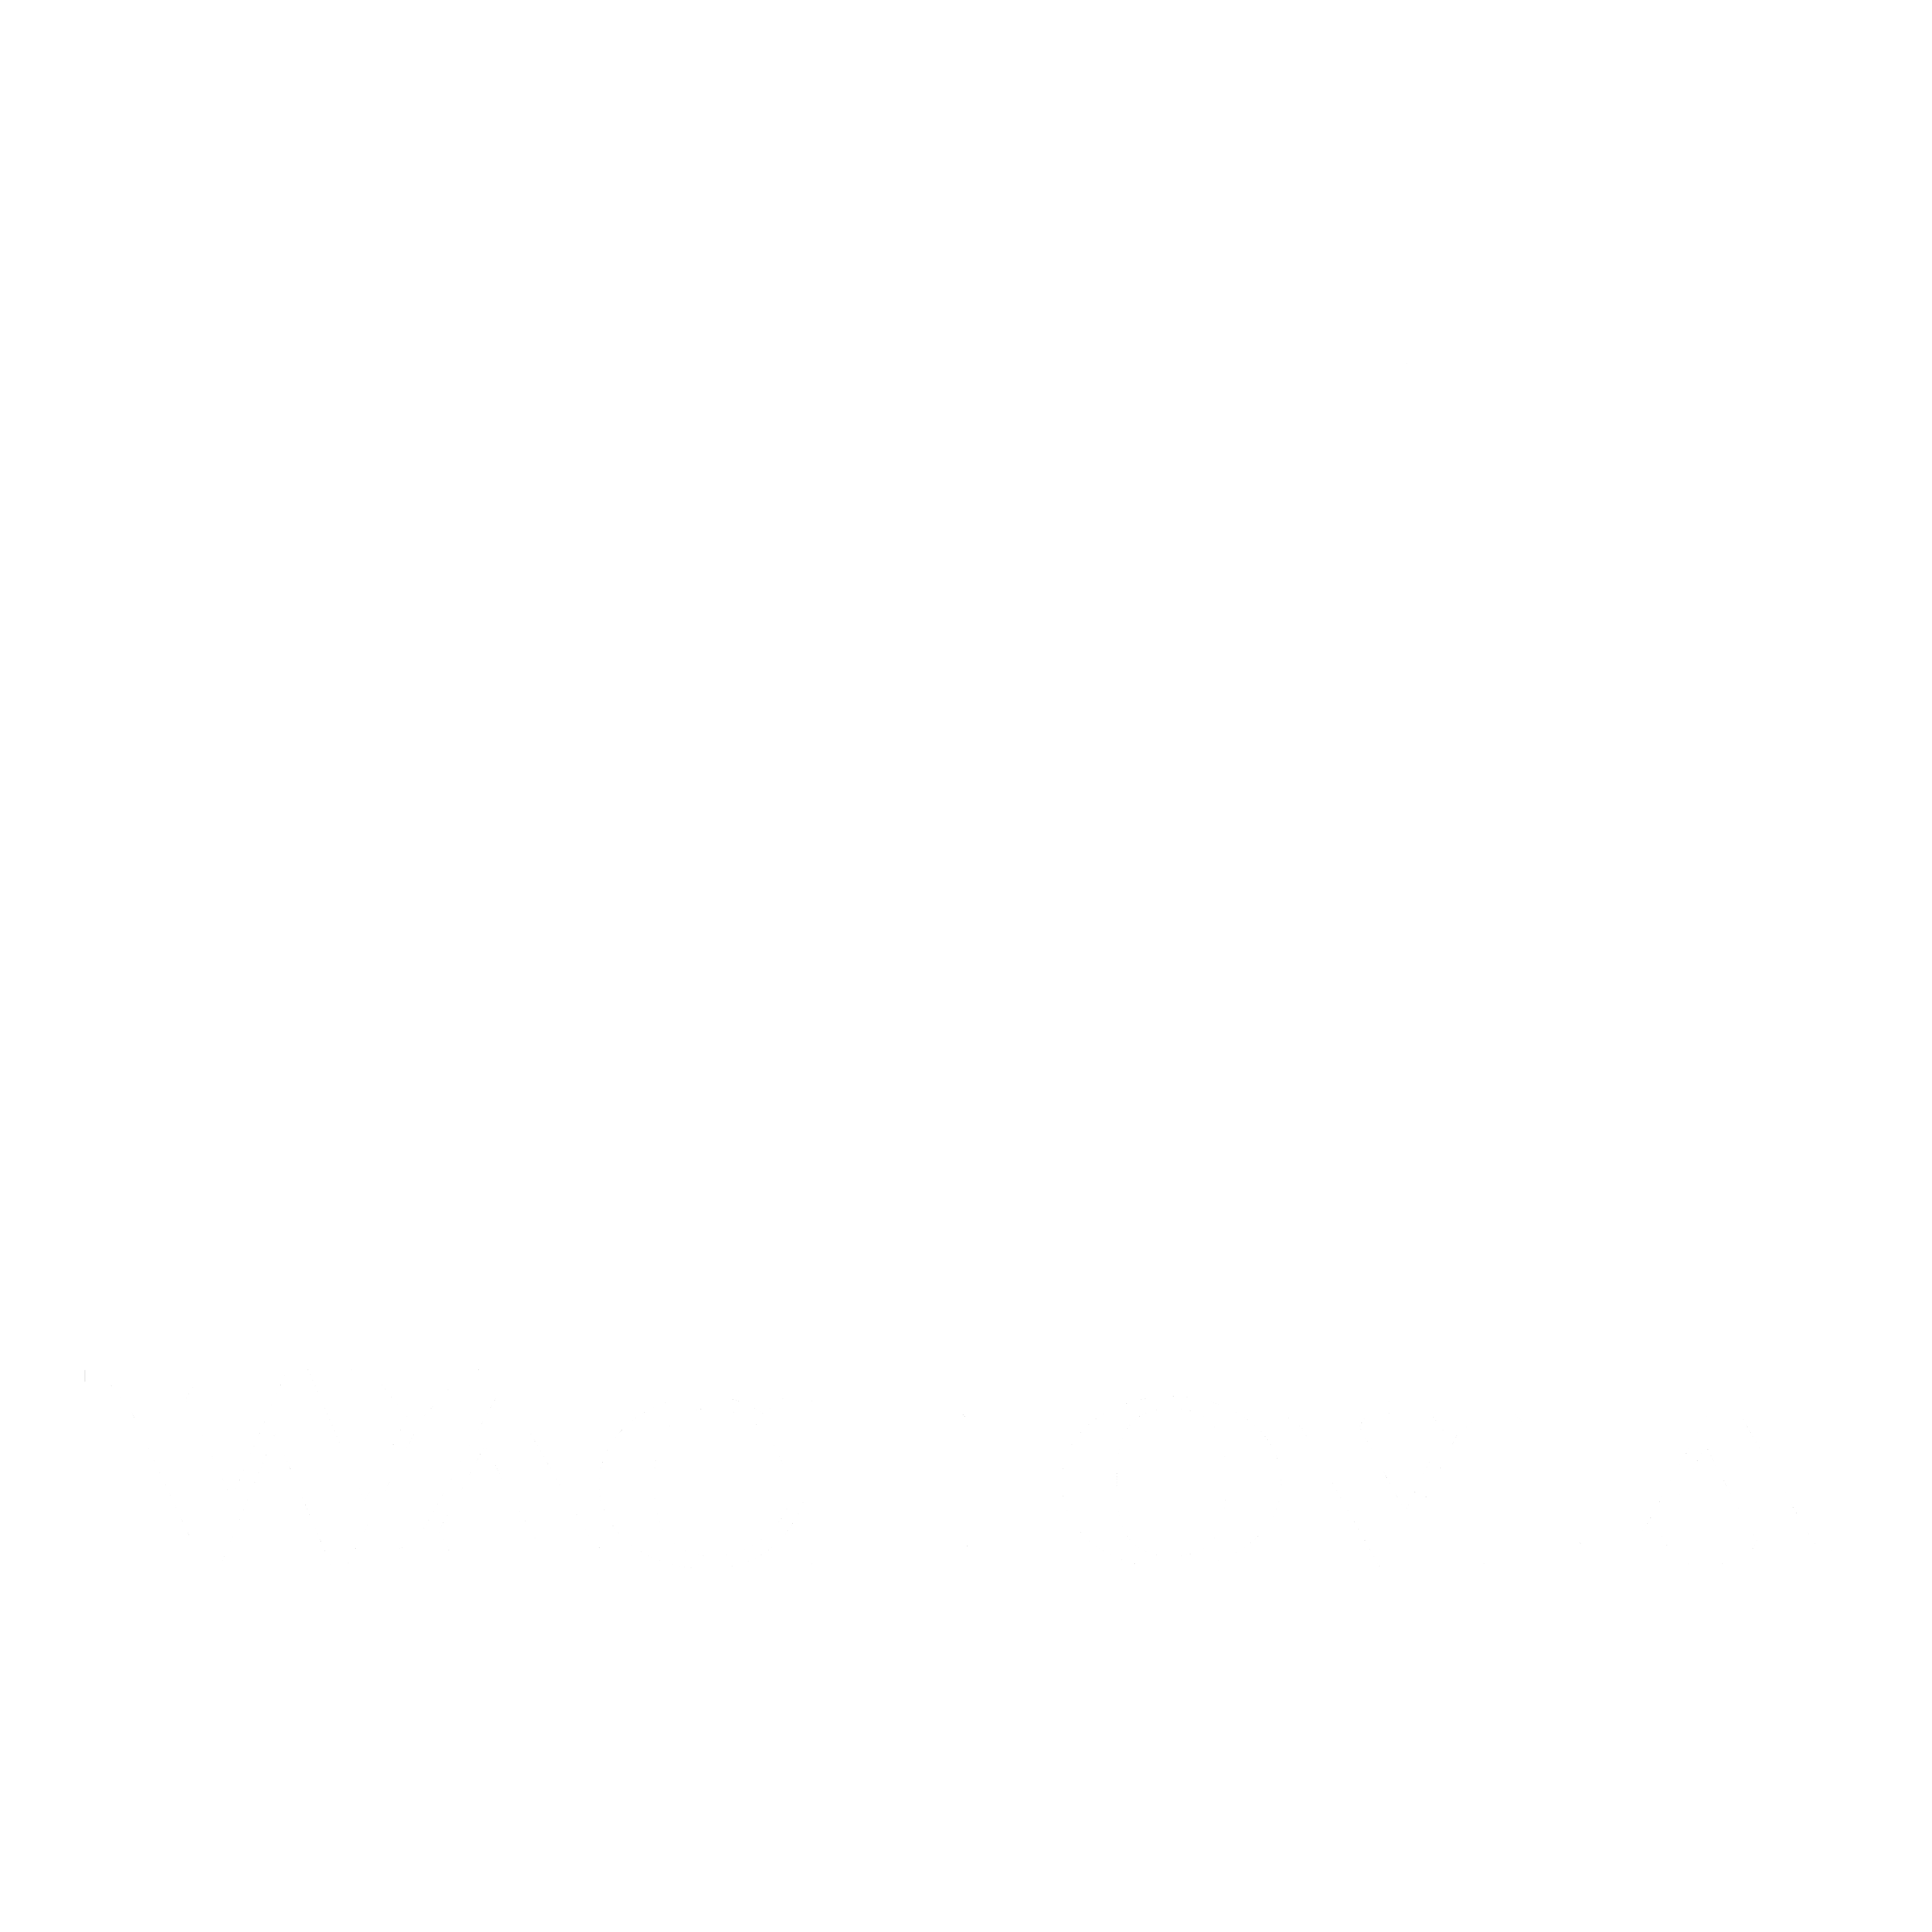 Wachovia Logo - Wachovia Logo PNG Transparent & SVG Vector